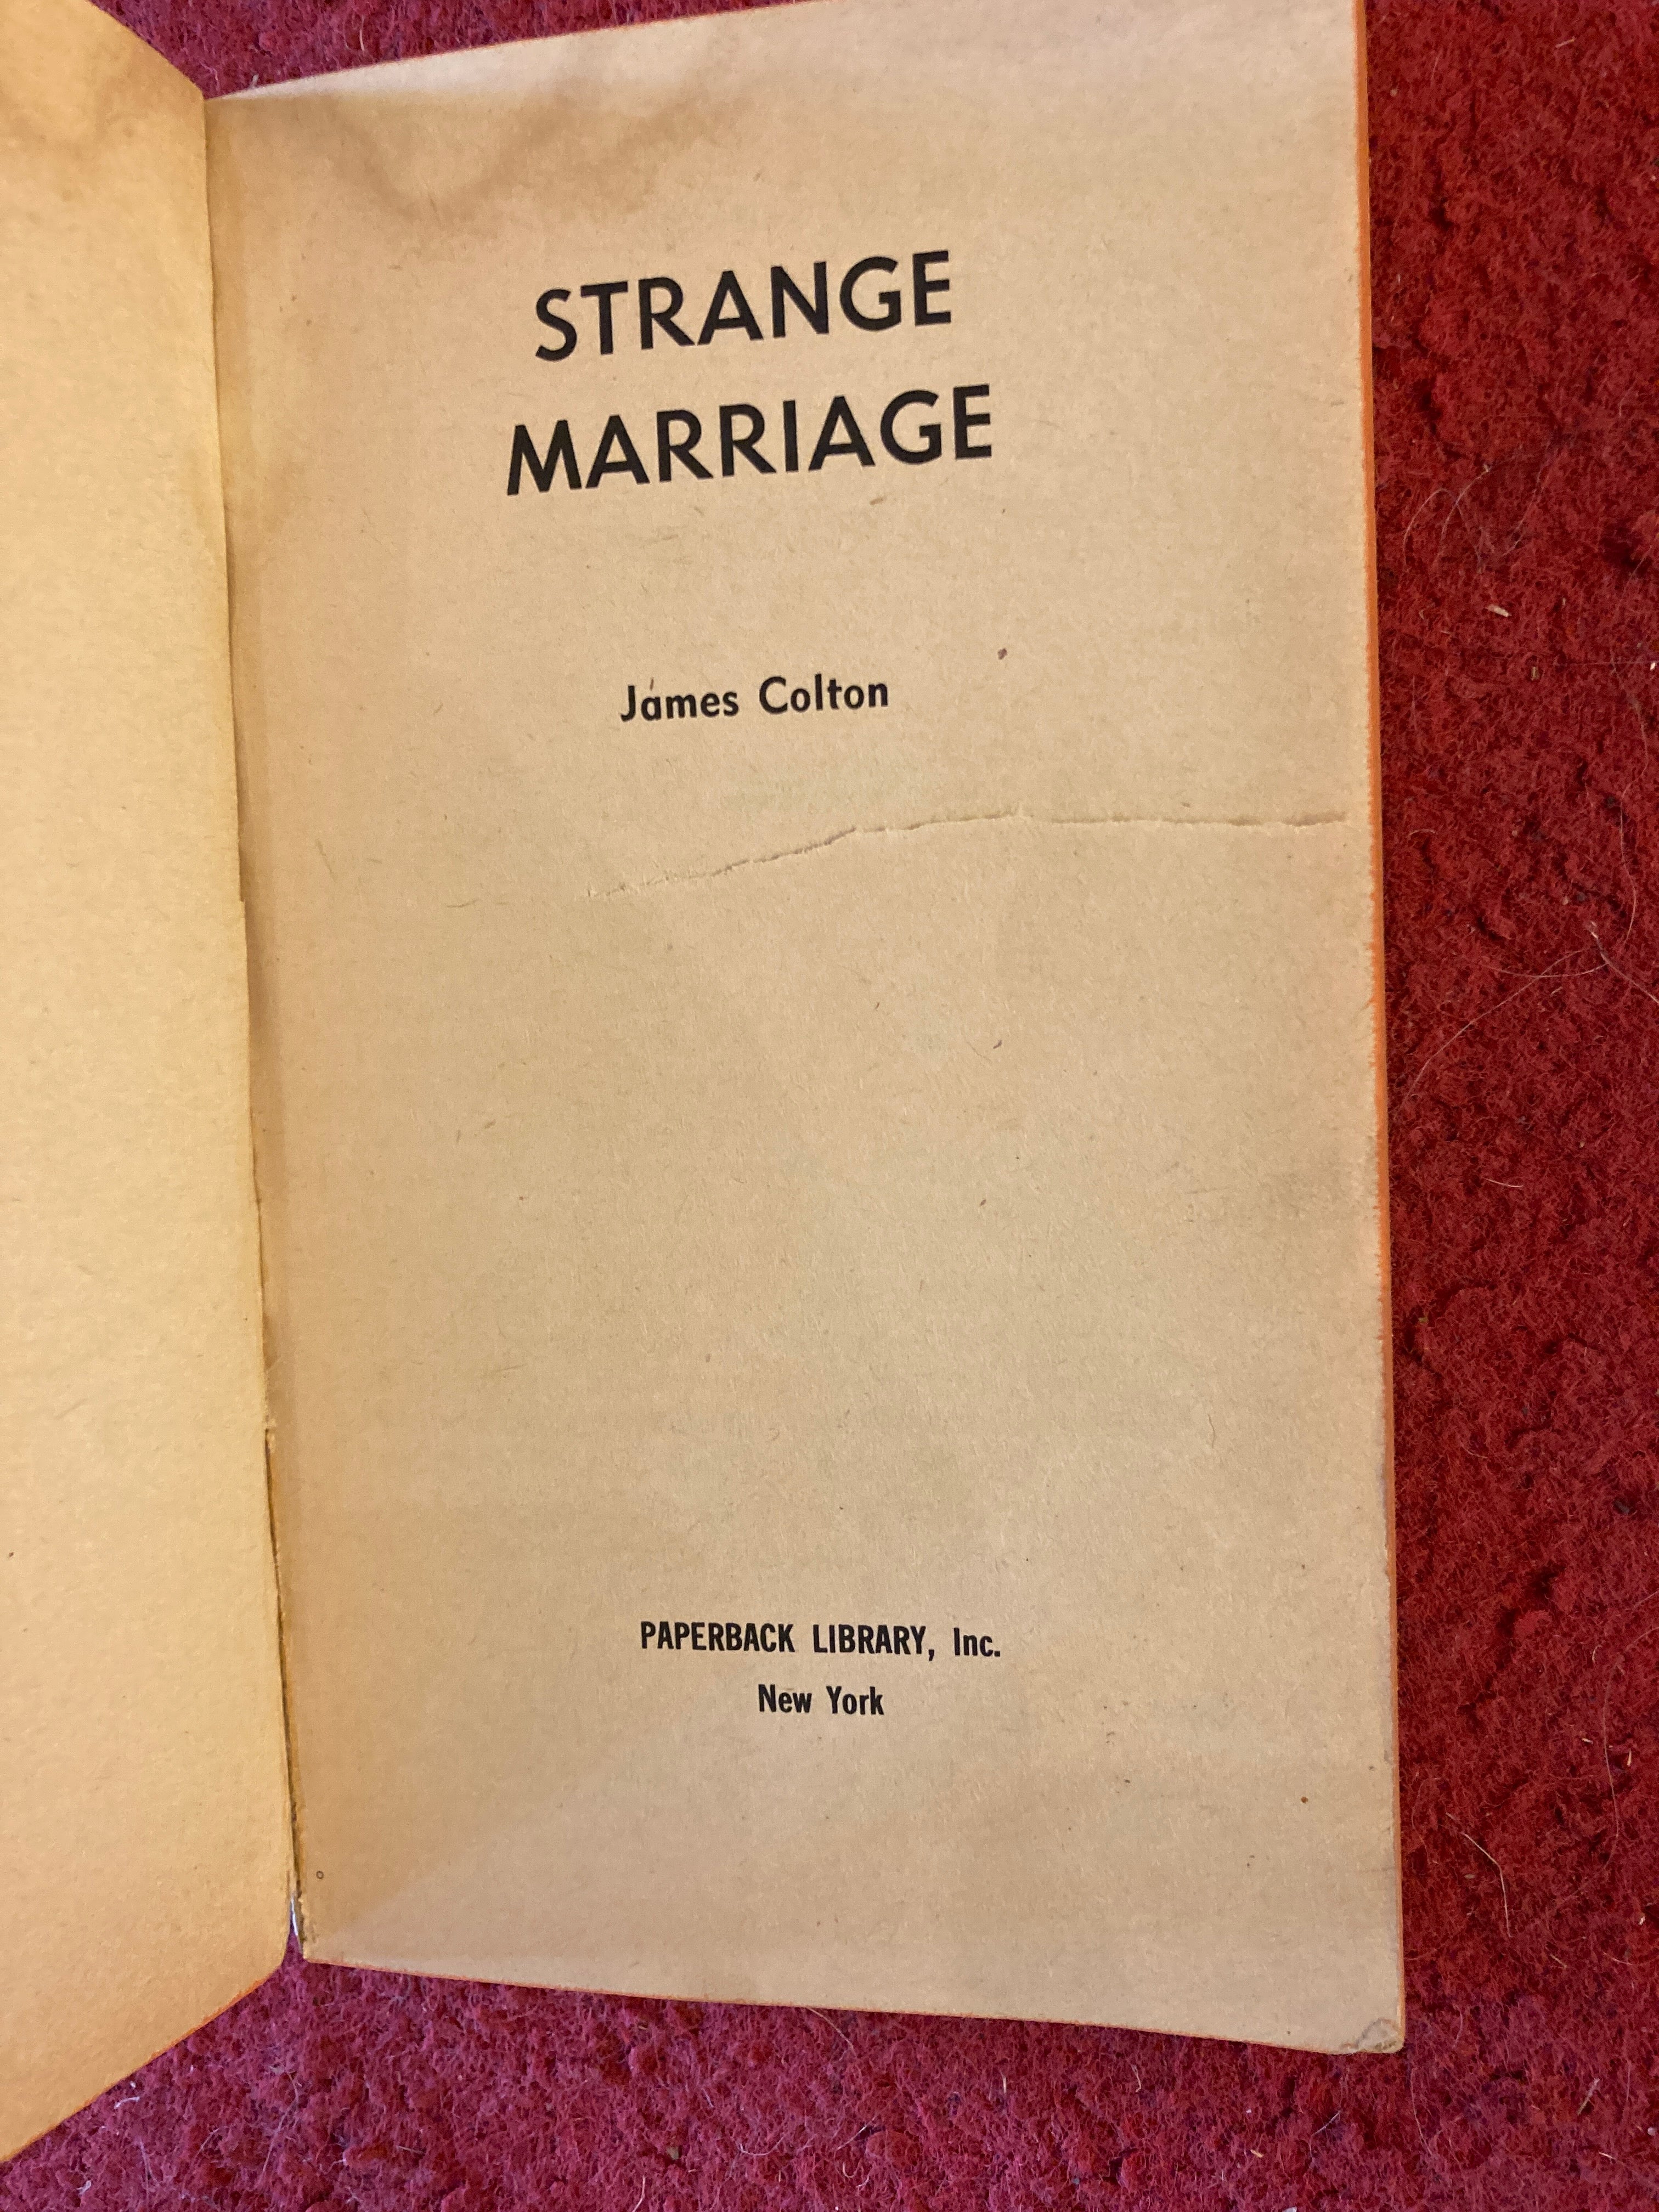 Strange Marriage, James Colton, 1965 Pulp Fiction Paperback Library*